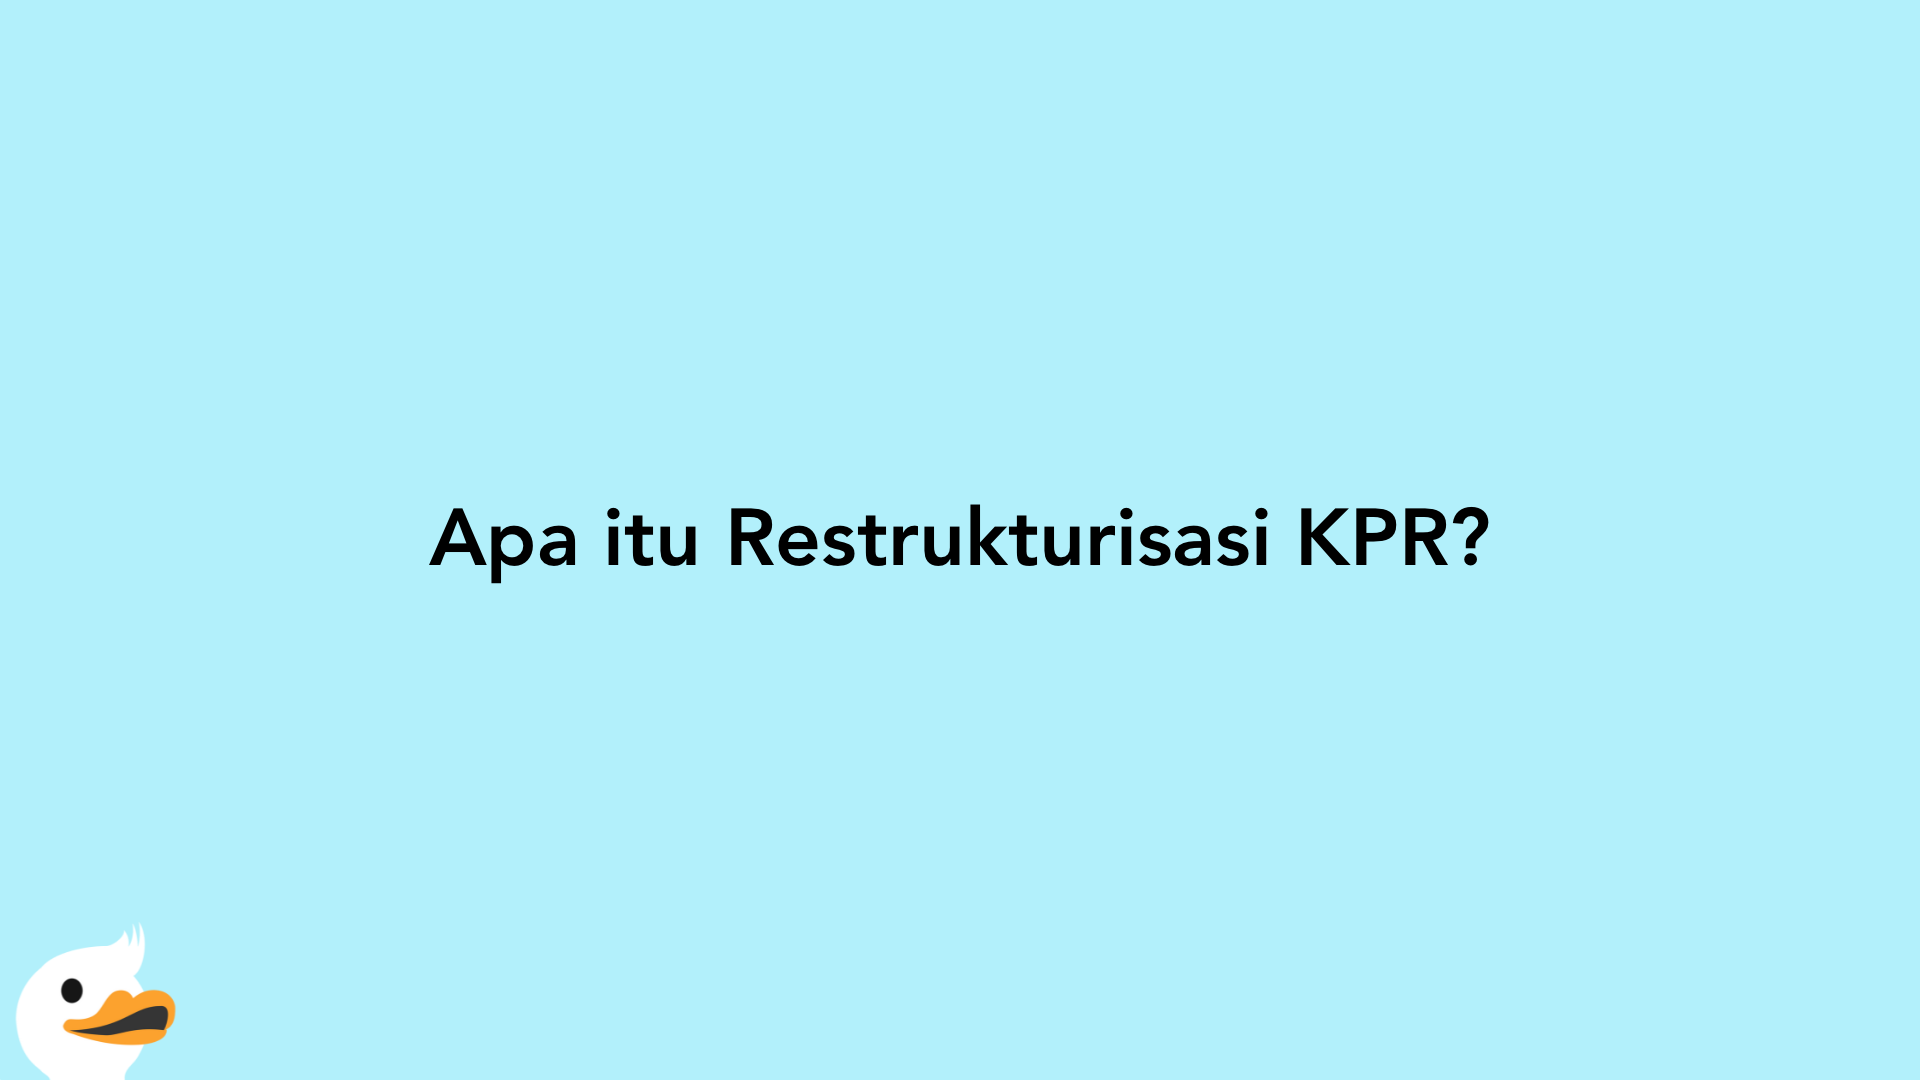 Apa itu Restrukturisasi KPR?